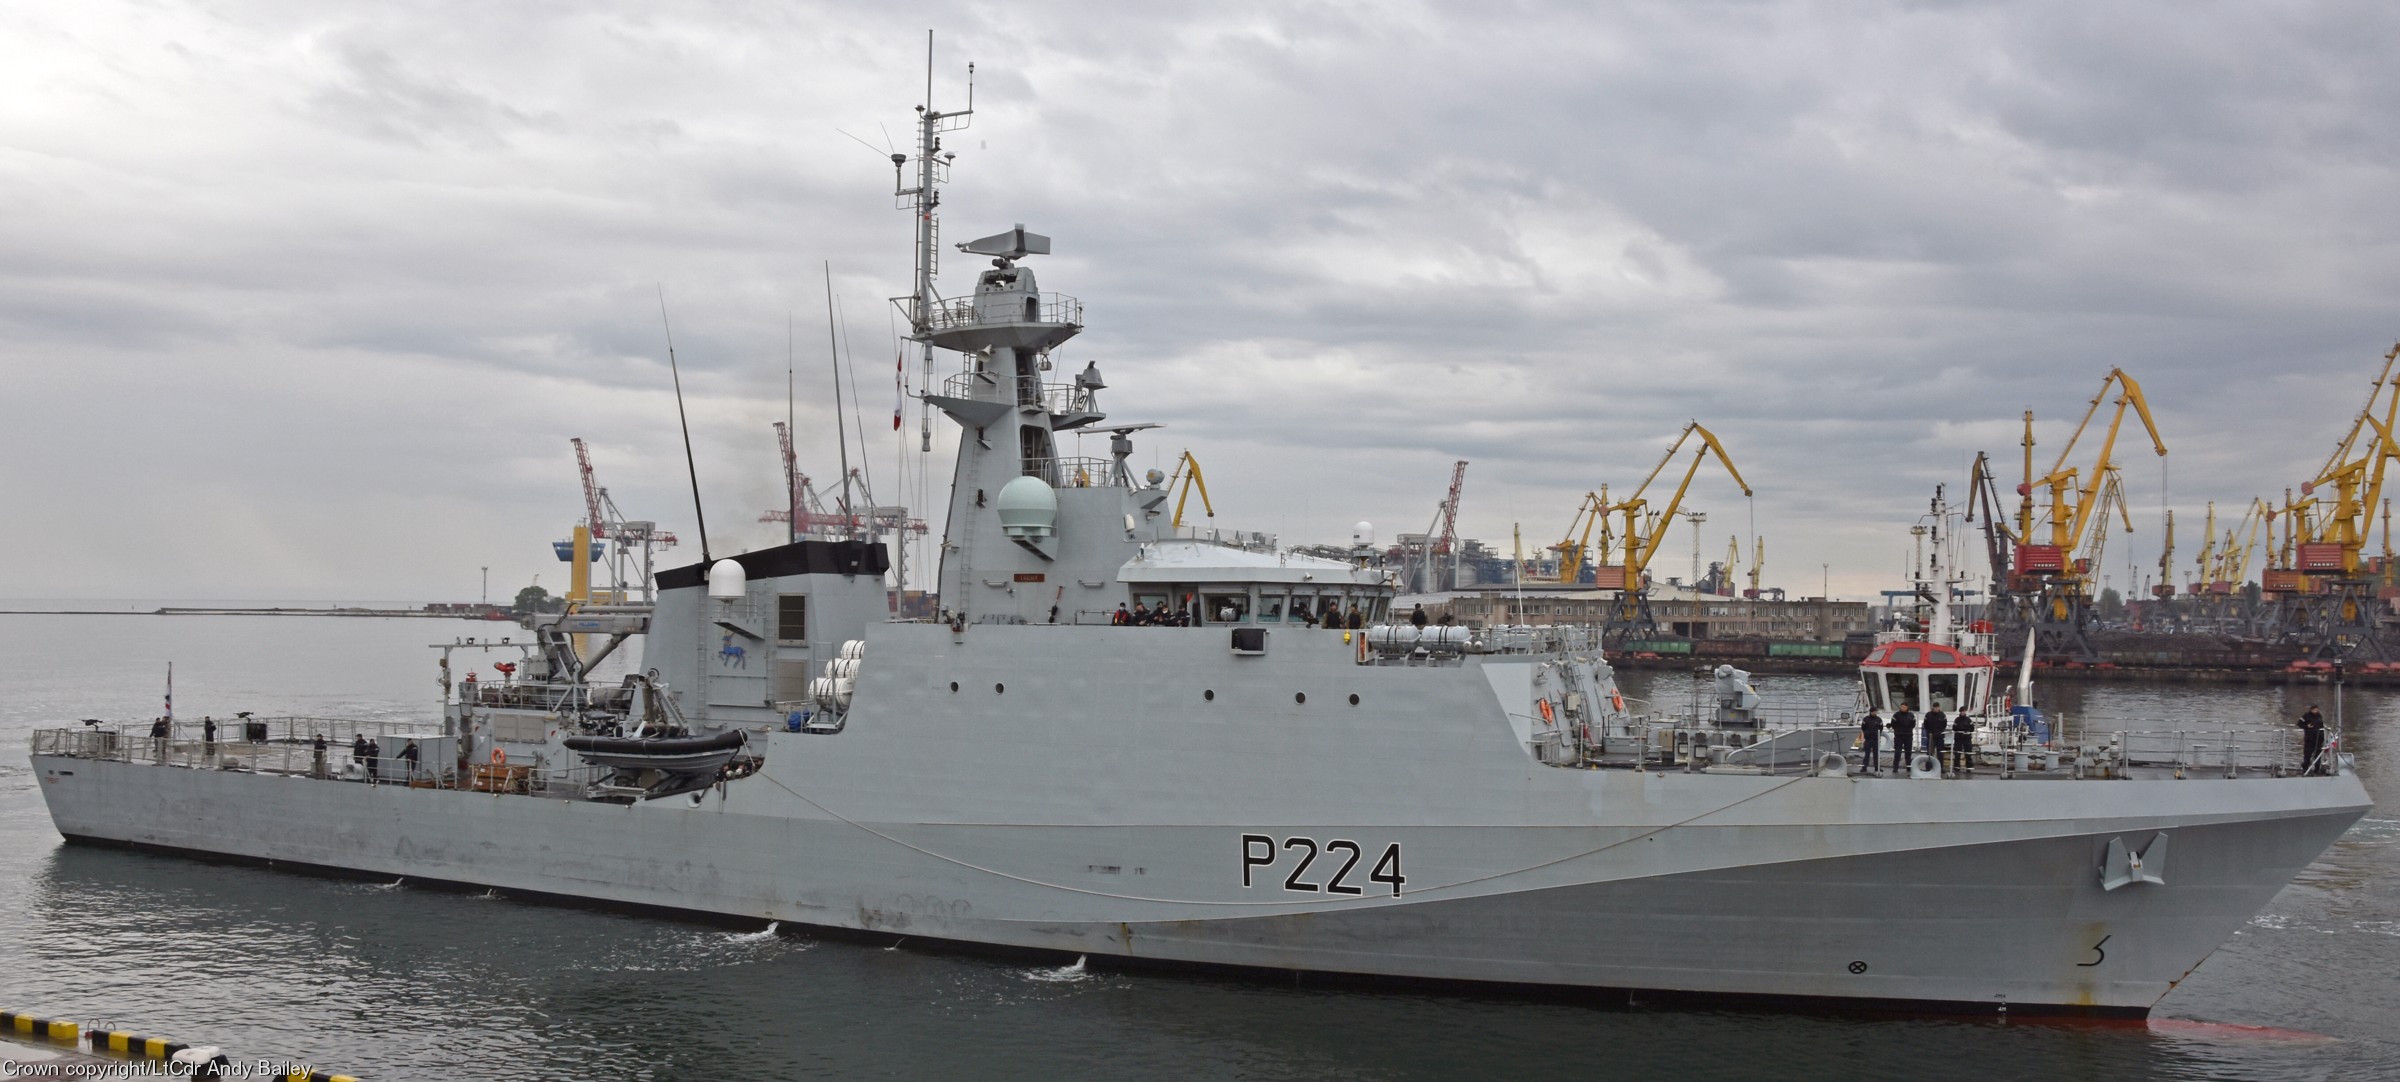 p224 hms trent river class offshore patrol vessel opv royal navy 46 odesa ukraine